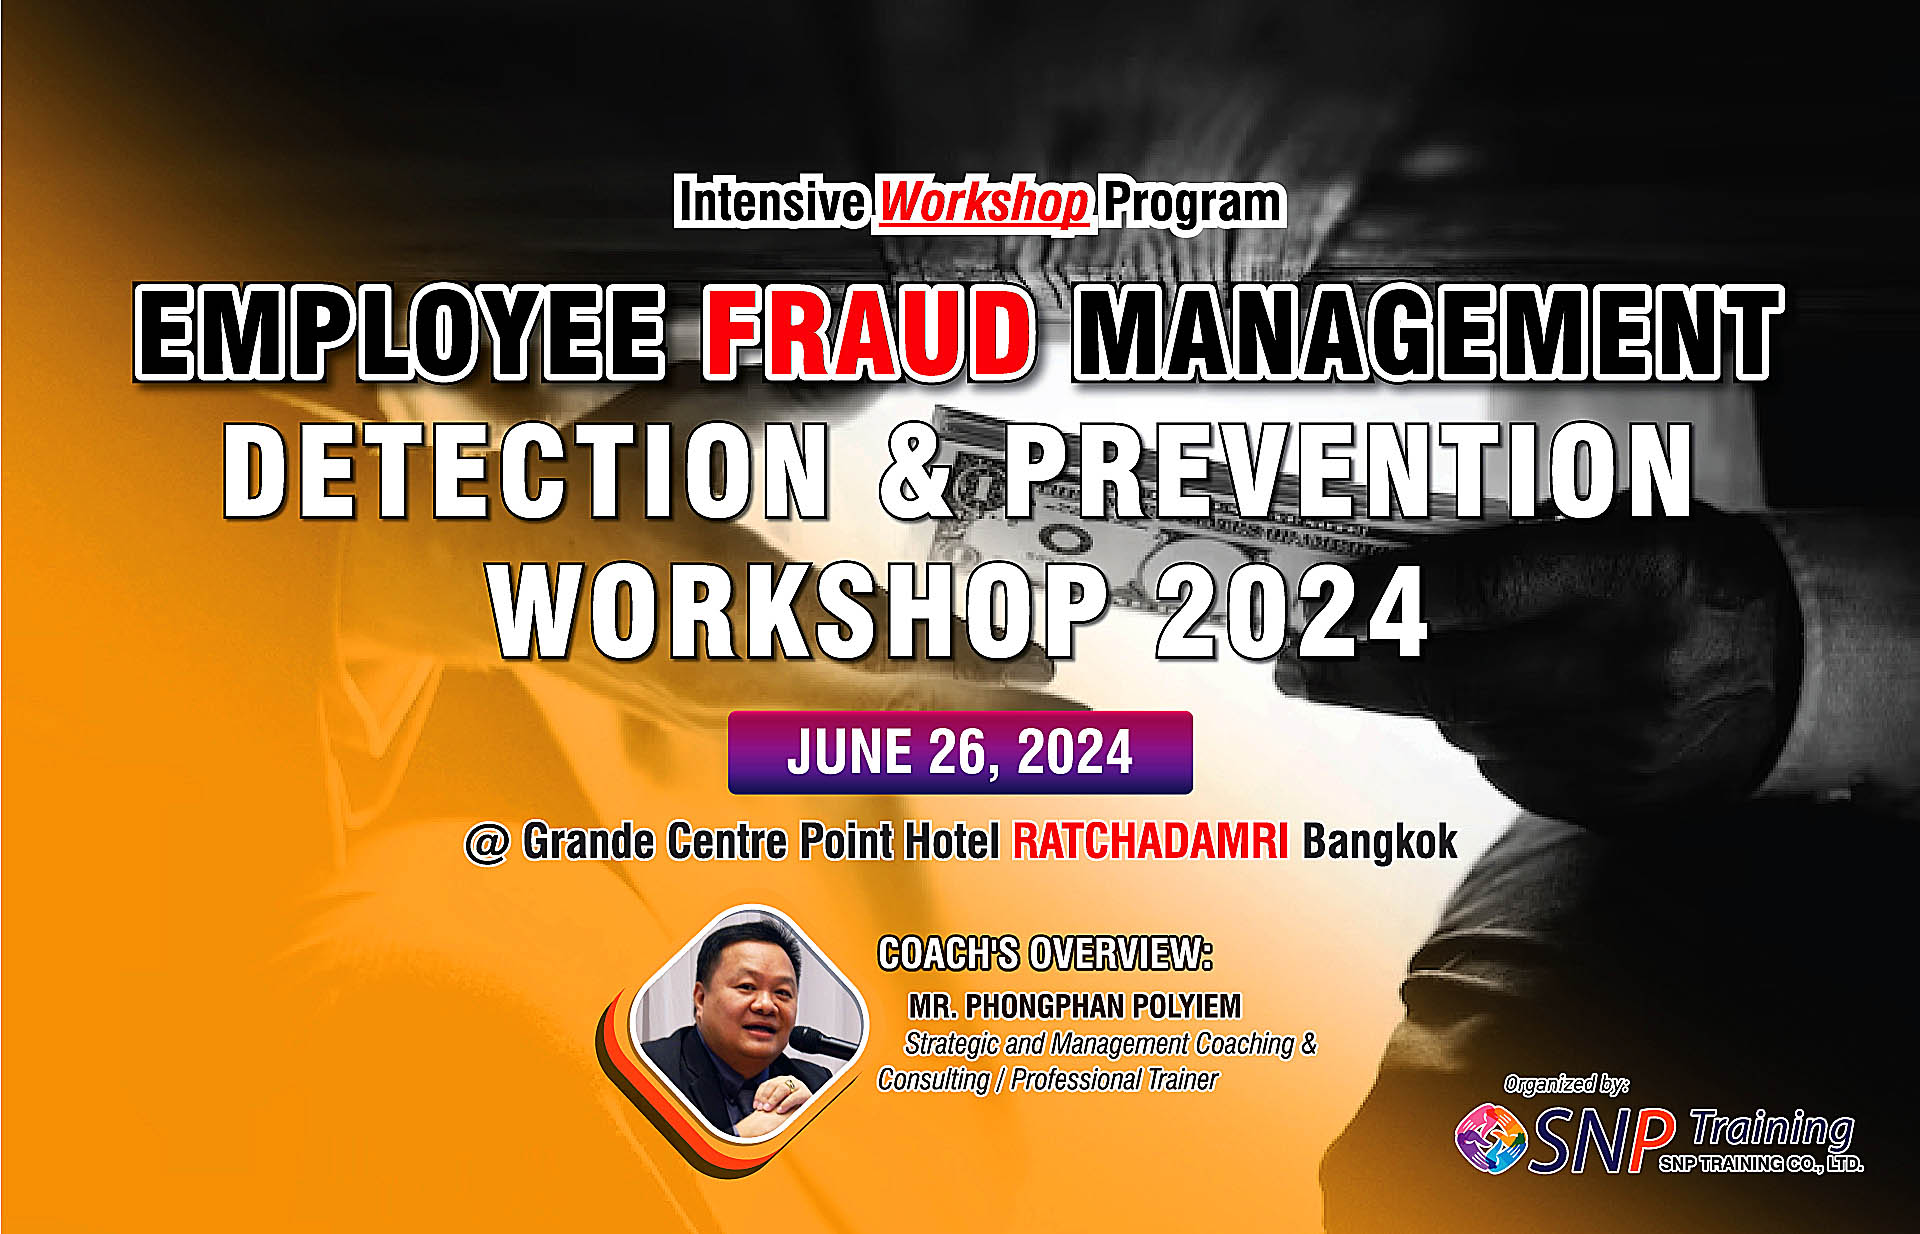 Employee Fraud Management Detection & Prevention Workshop 2024